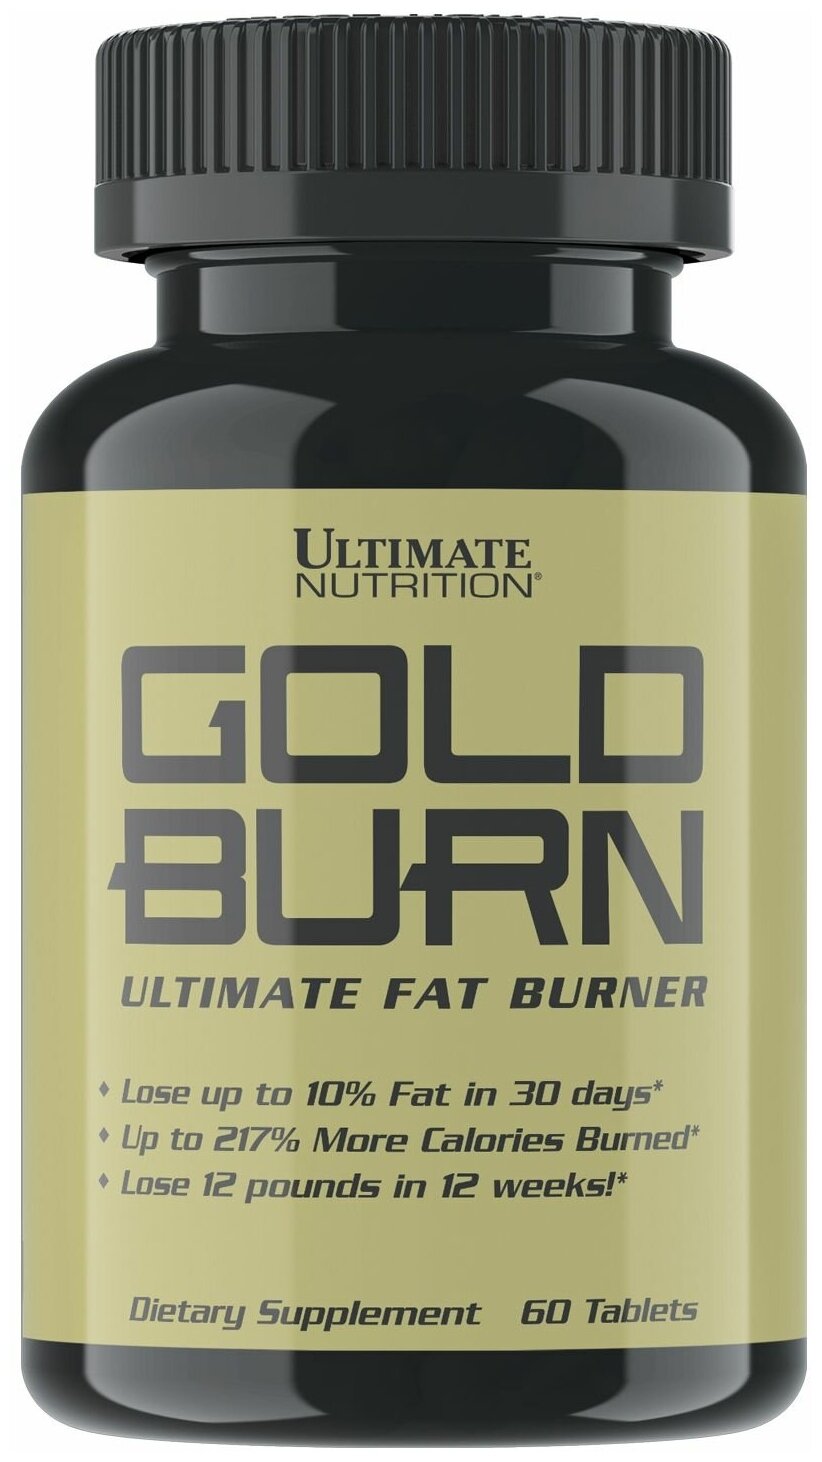 Жиросжигатель Ultimate Nutrition GOLD BURN 60 таблеток